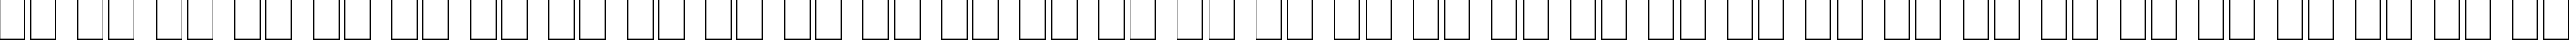 Пример написания русского алфавита шрифтом GreekMathSymbols Plain:001.003